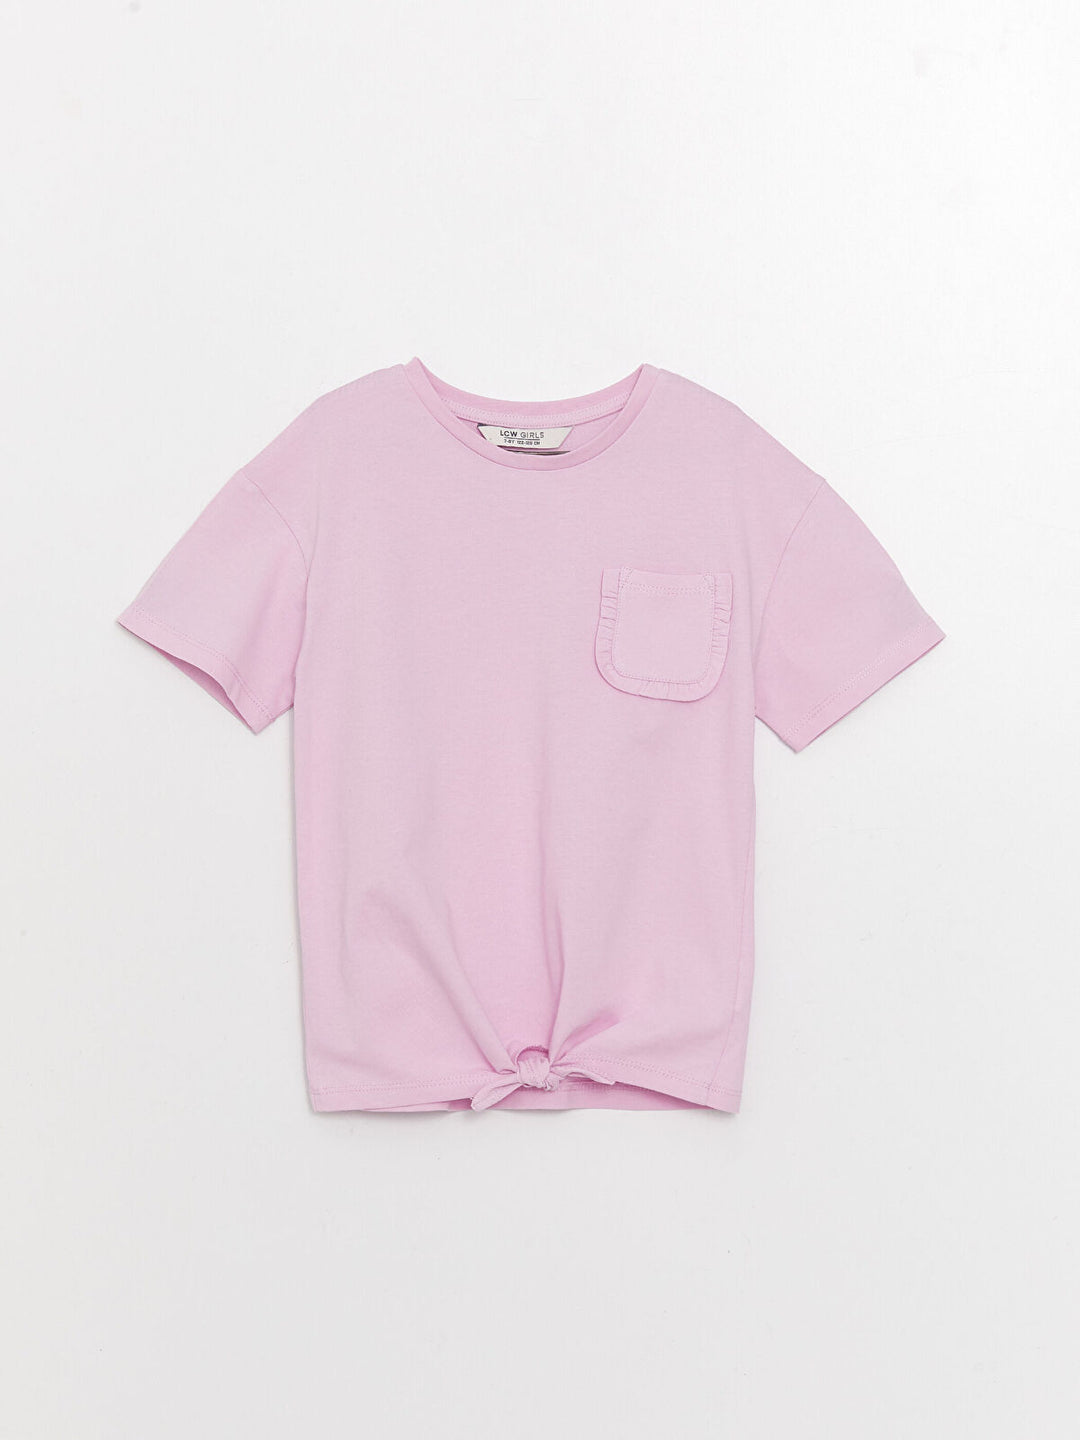 Kids Crew Neck Basic Short Sleeve Girls T-Shirt